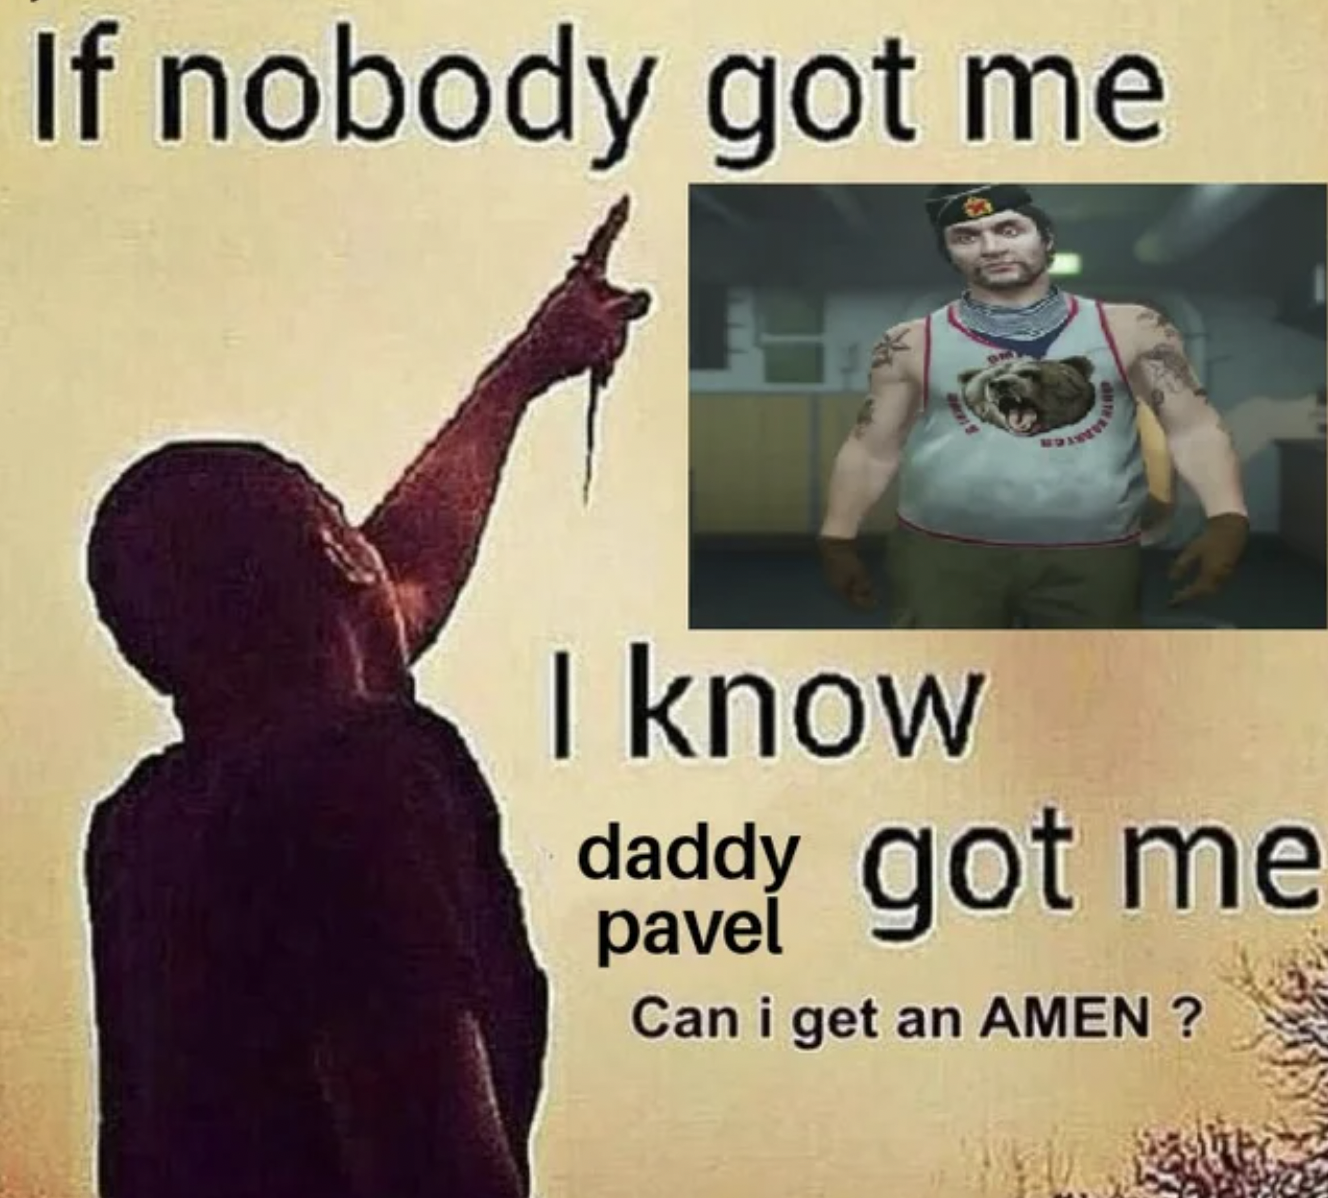 GTA V Memes - if nobody got me blank - If nobody got me I know daddy got me pavel Can i get an Amen ?